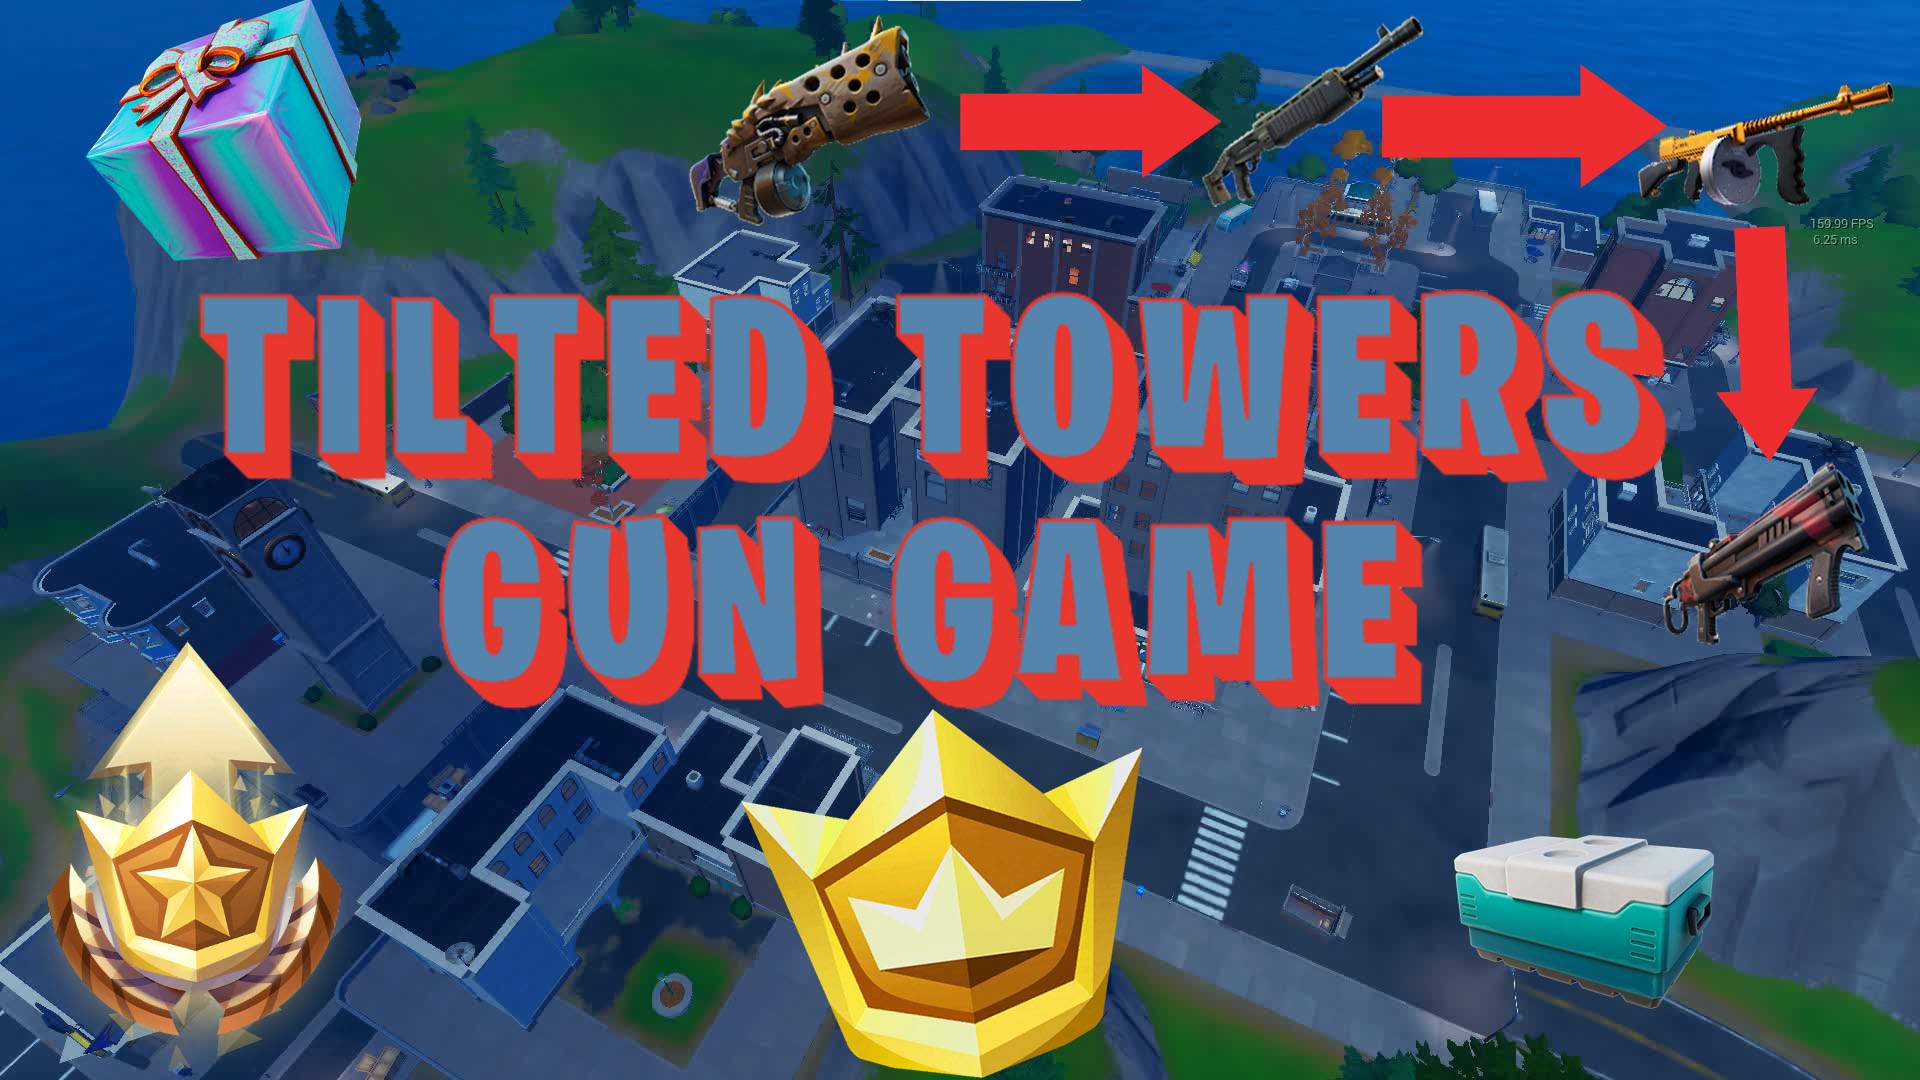 Tilted Towers GUN GAME